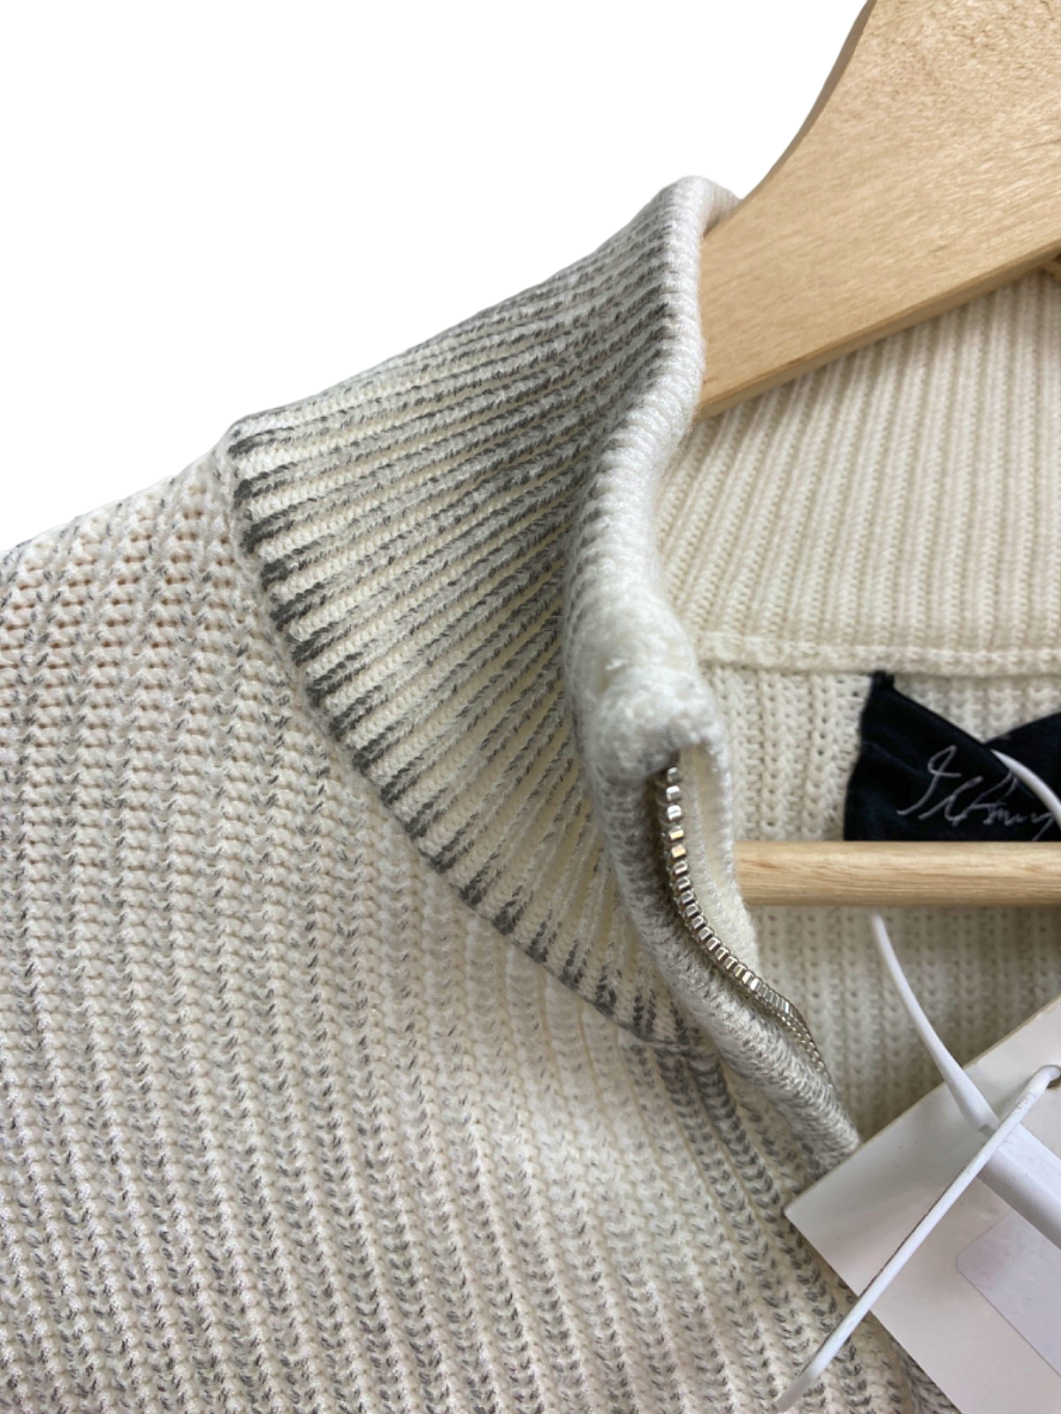 JCAESAR Off White Zip-Up Ribbed Sweater UK Size L